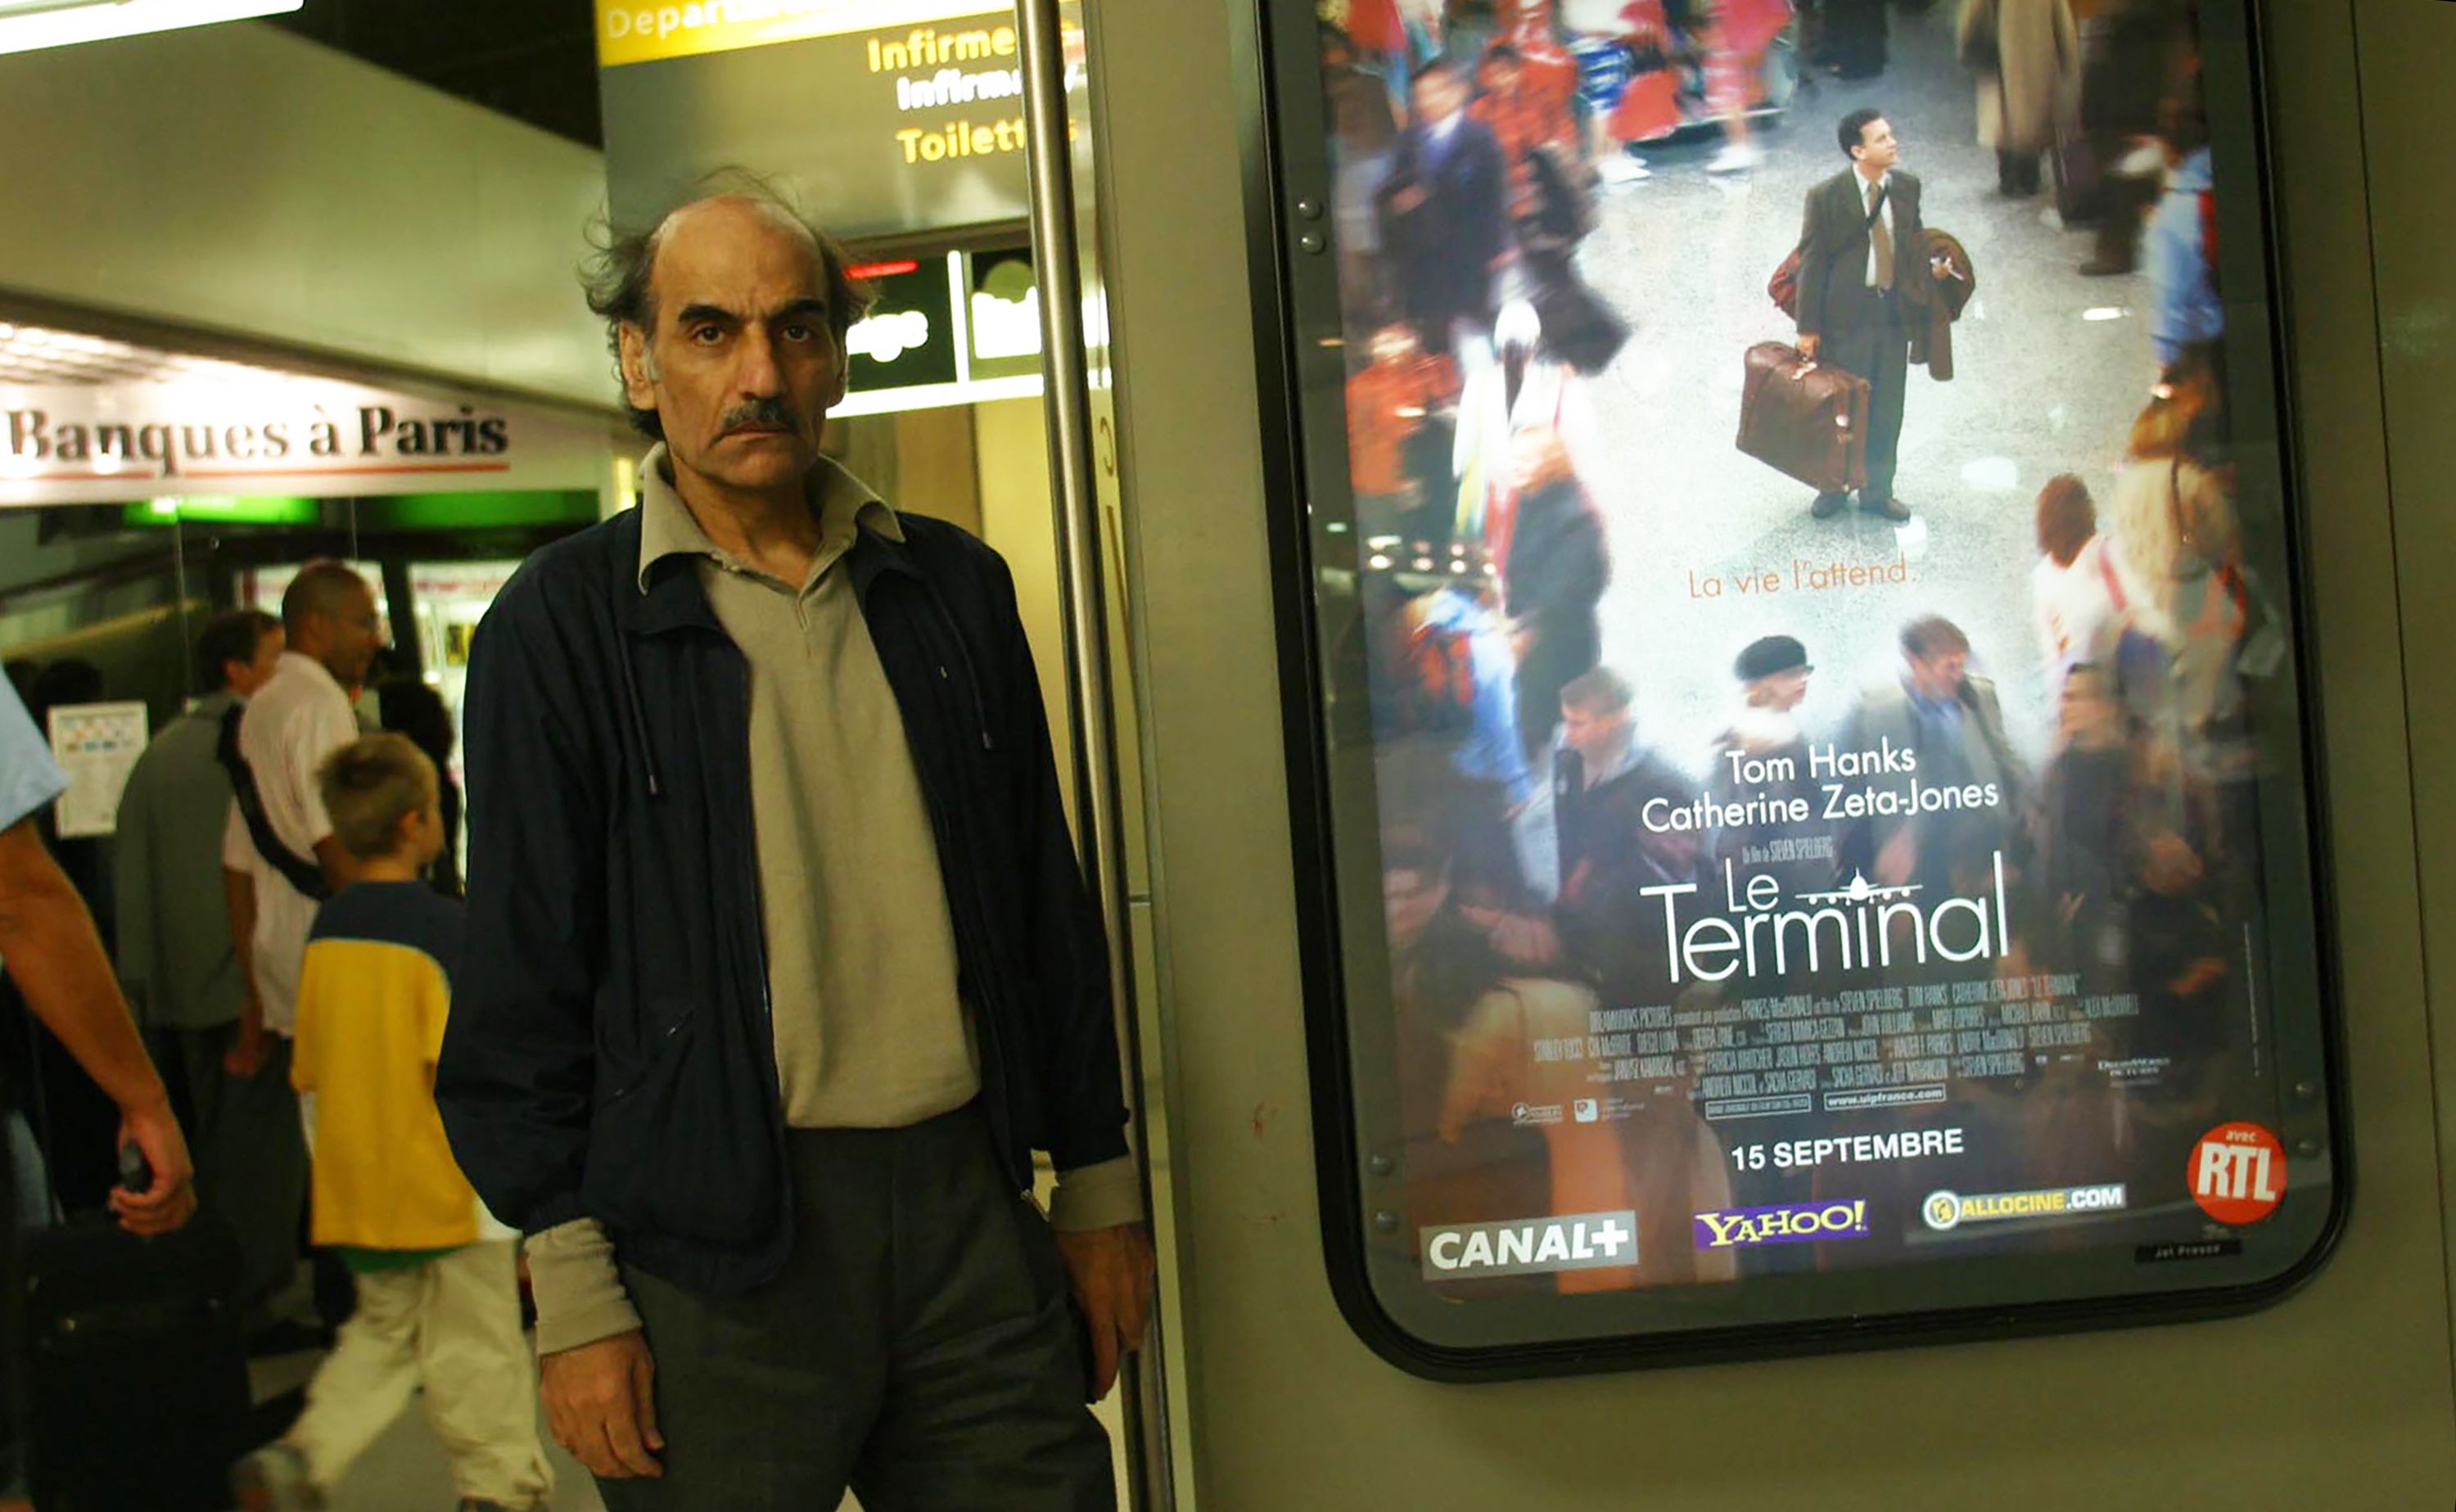 Mehran Karimi Nasseri: Iranian man who inspired Spielberg's film